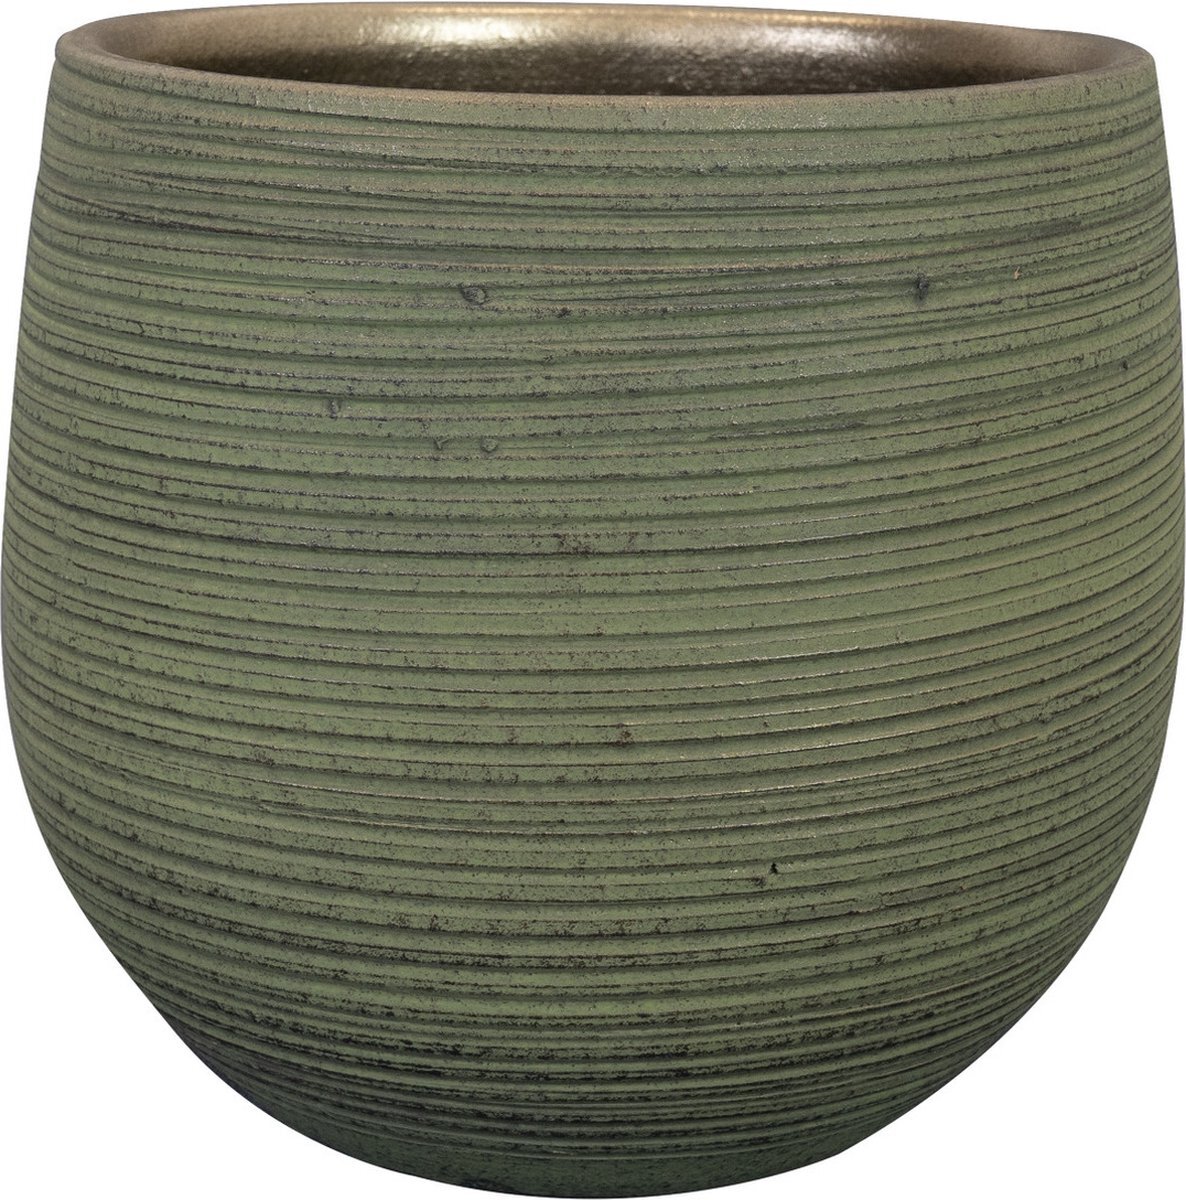 Steege, TER Steege Plantenpot/bloempot - keramiek - donkergroen stripes relief - D22/H20 cm